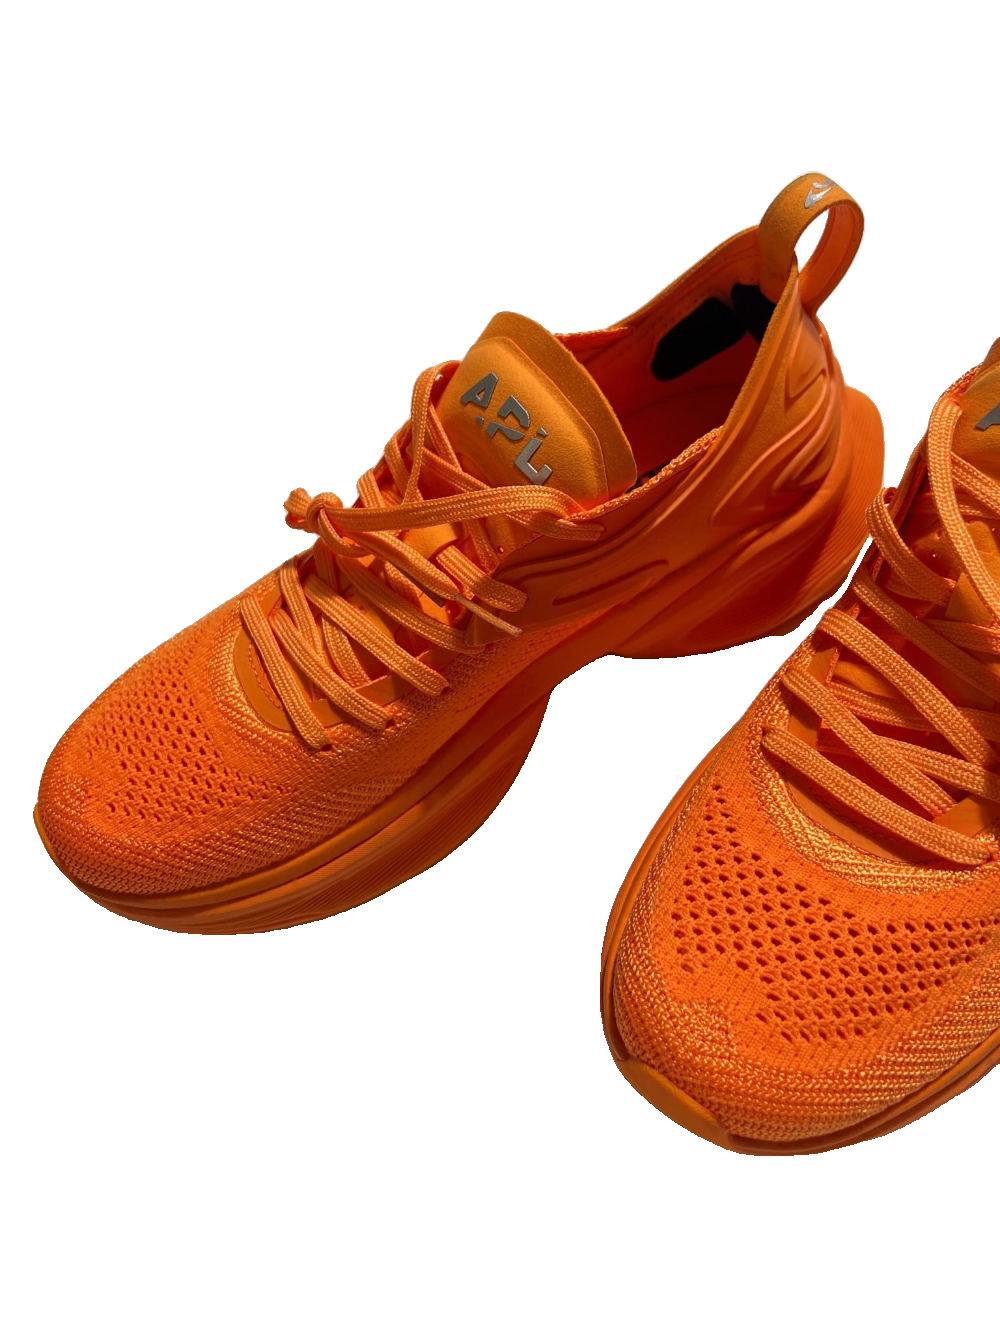 APL- Orange Sneakers